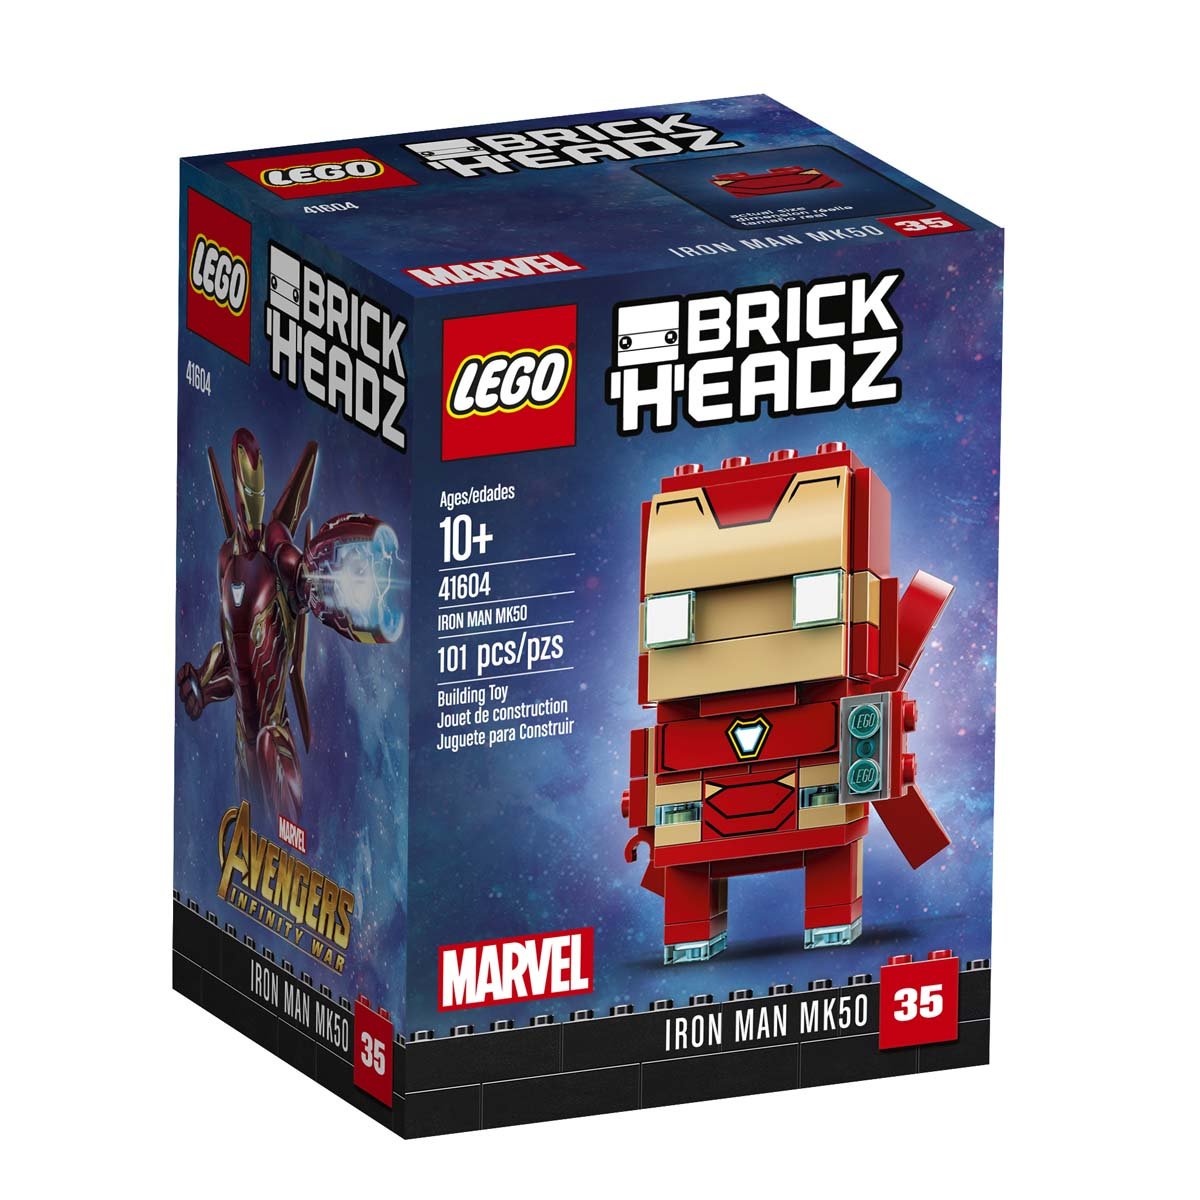 Brickheadz Ironman Marvel Lego